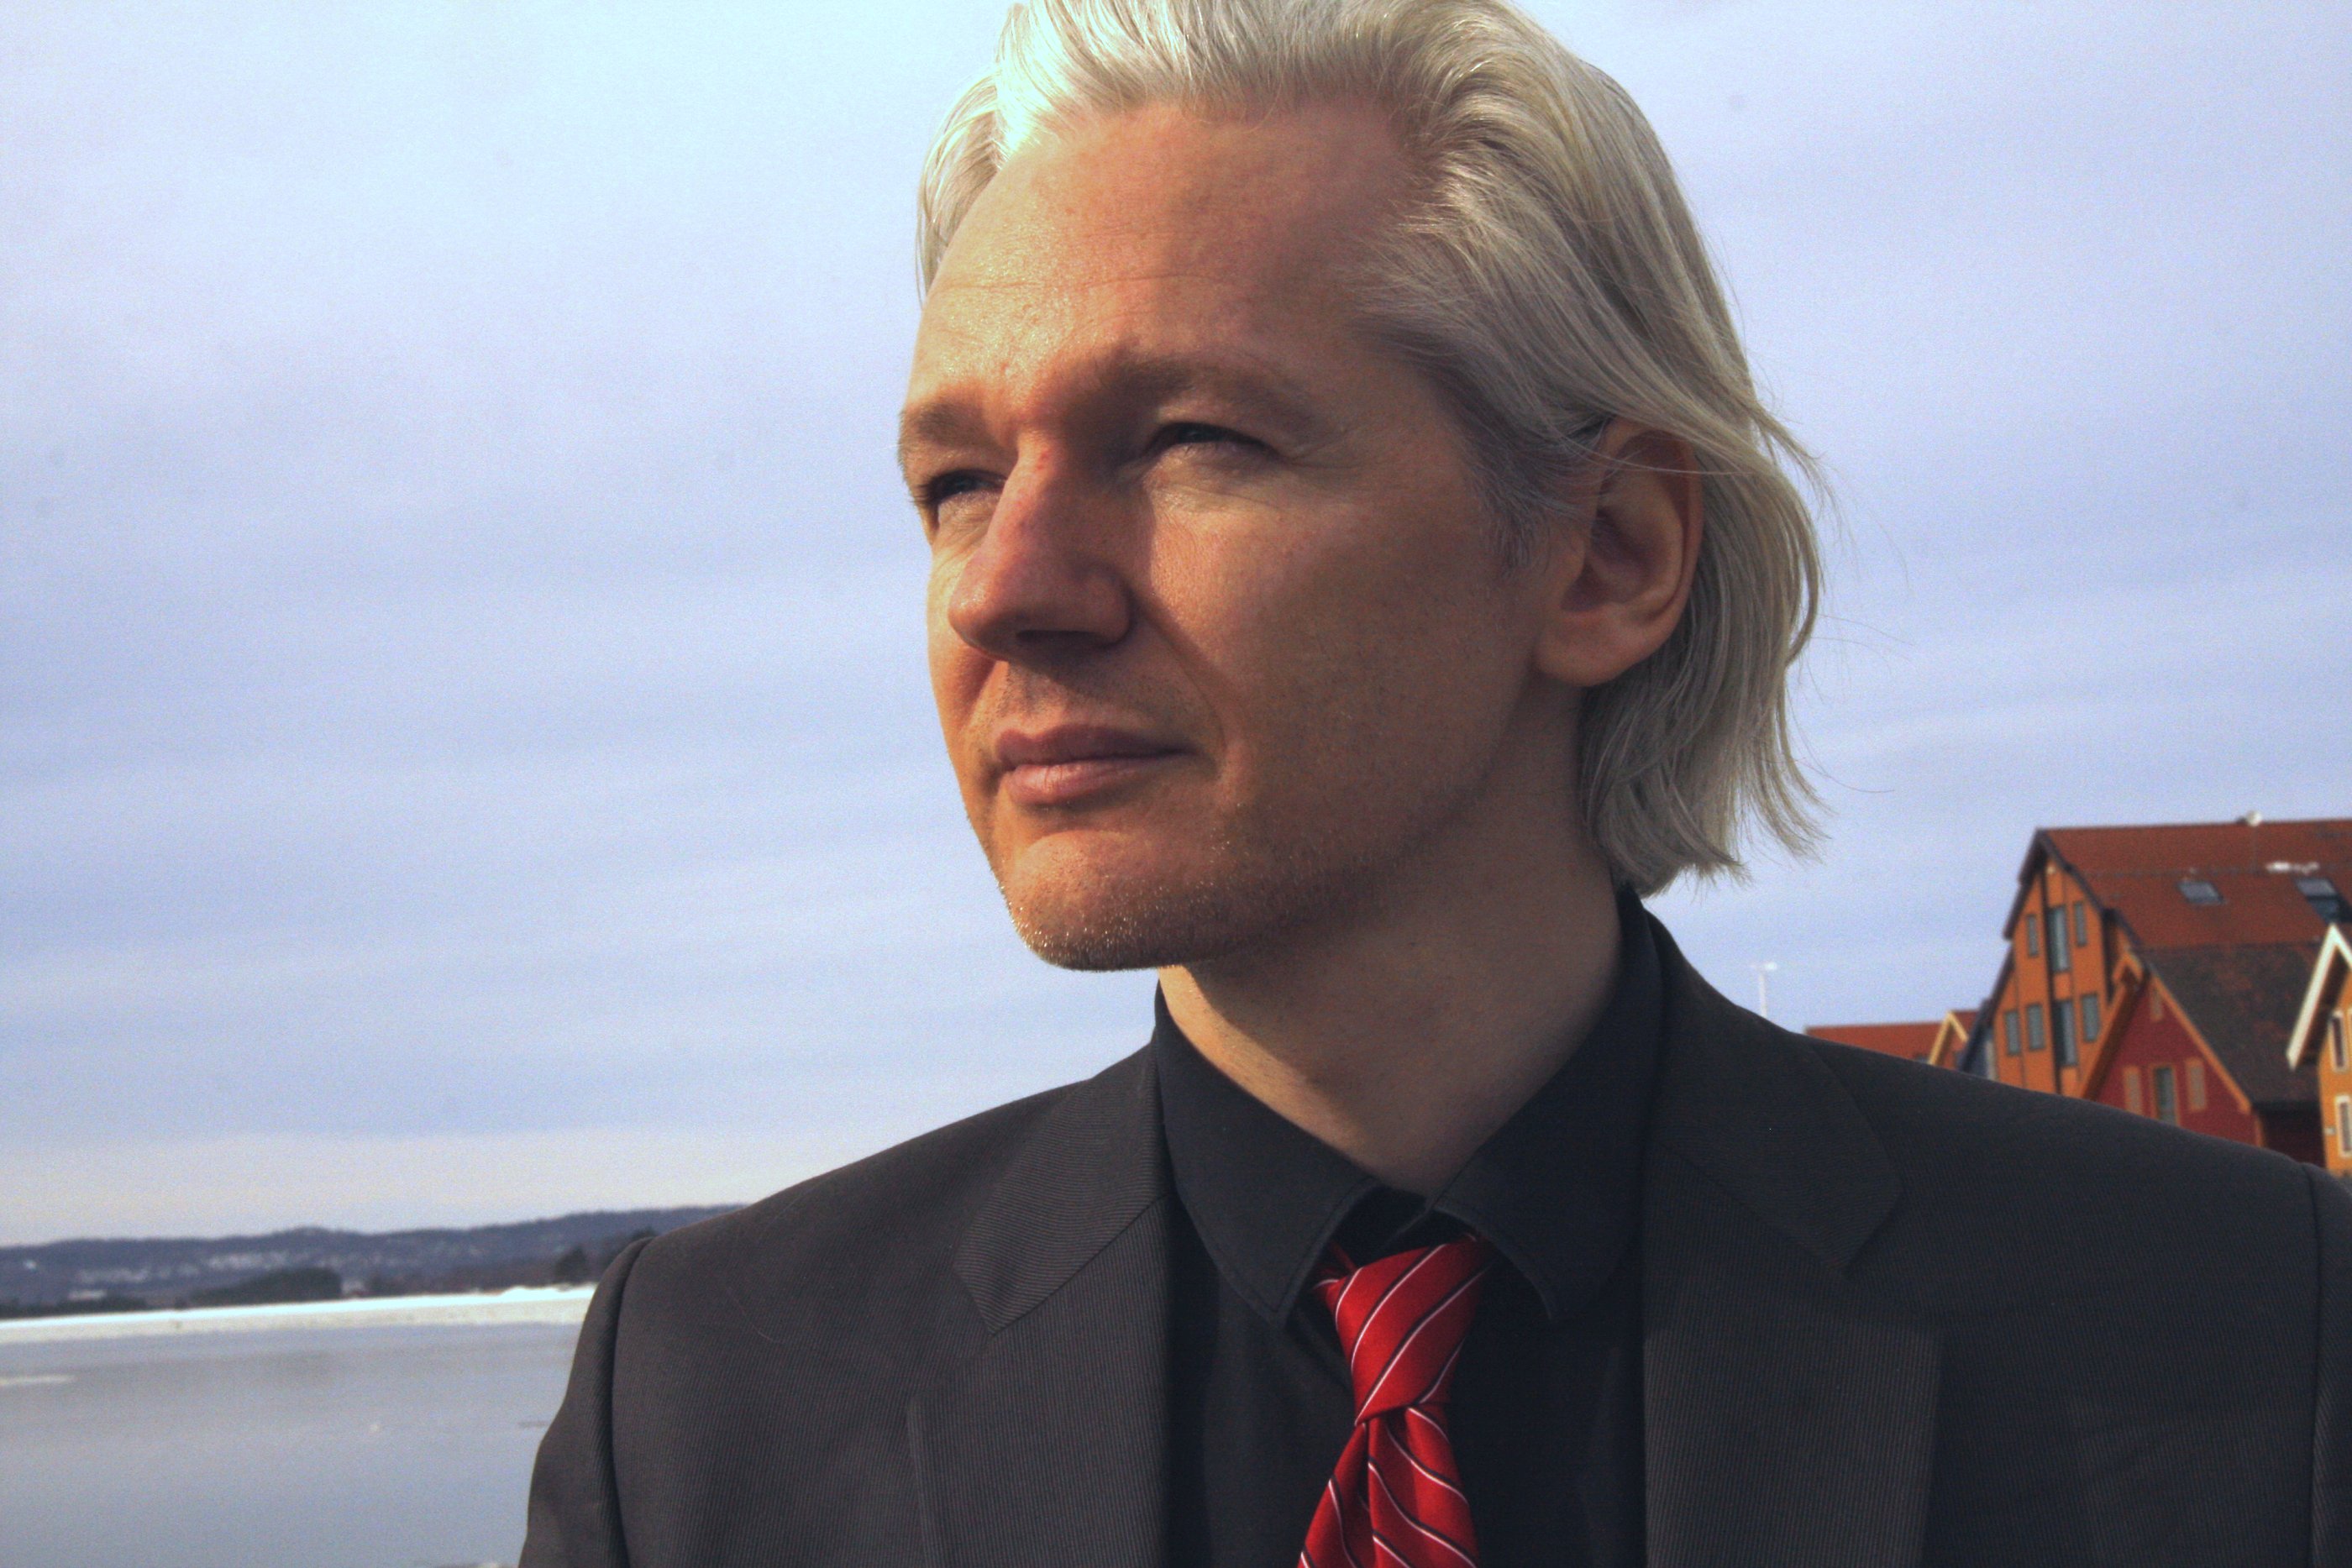 Did an assassin try to kill Wikileaks founder Julian Assange?